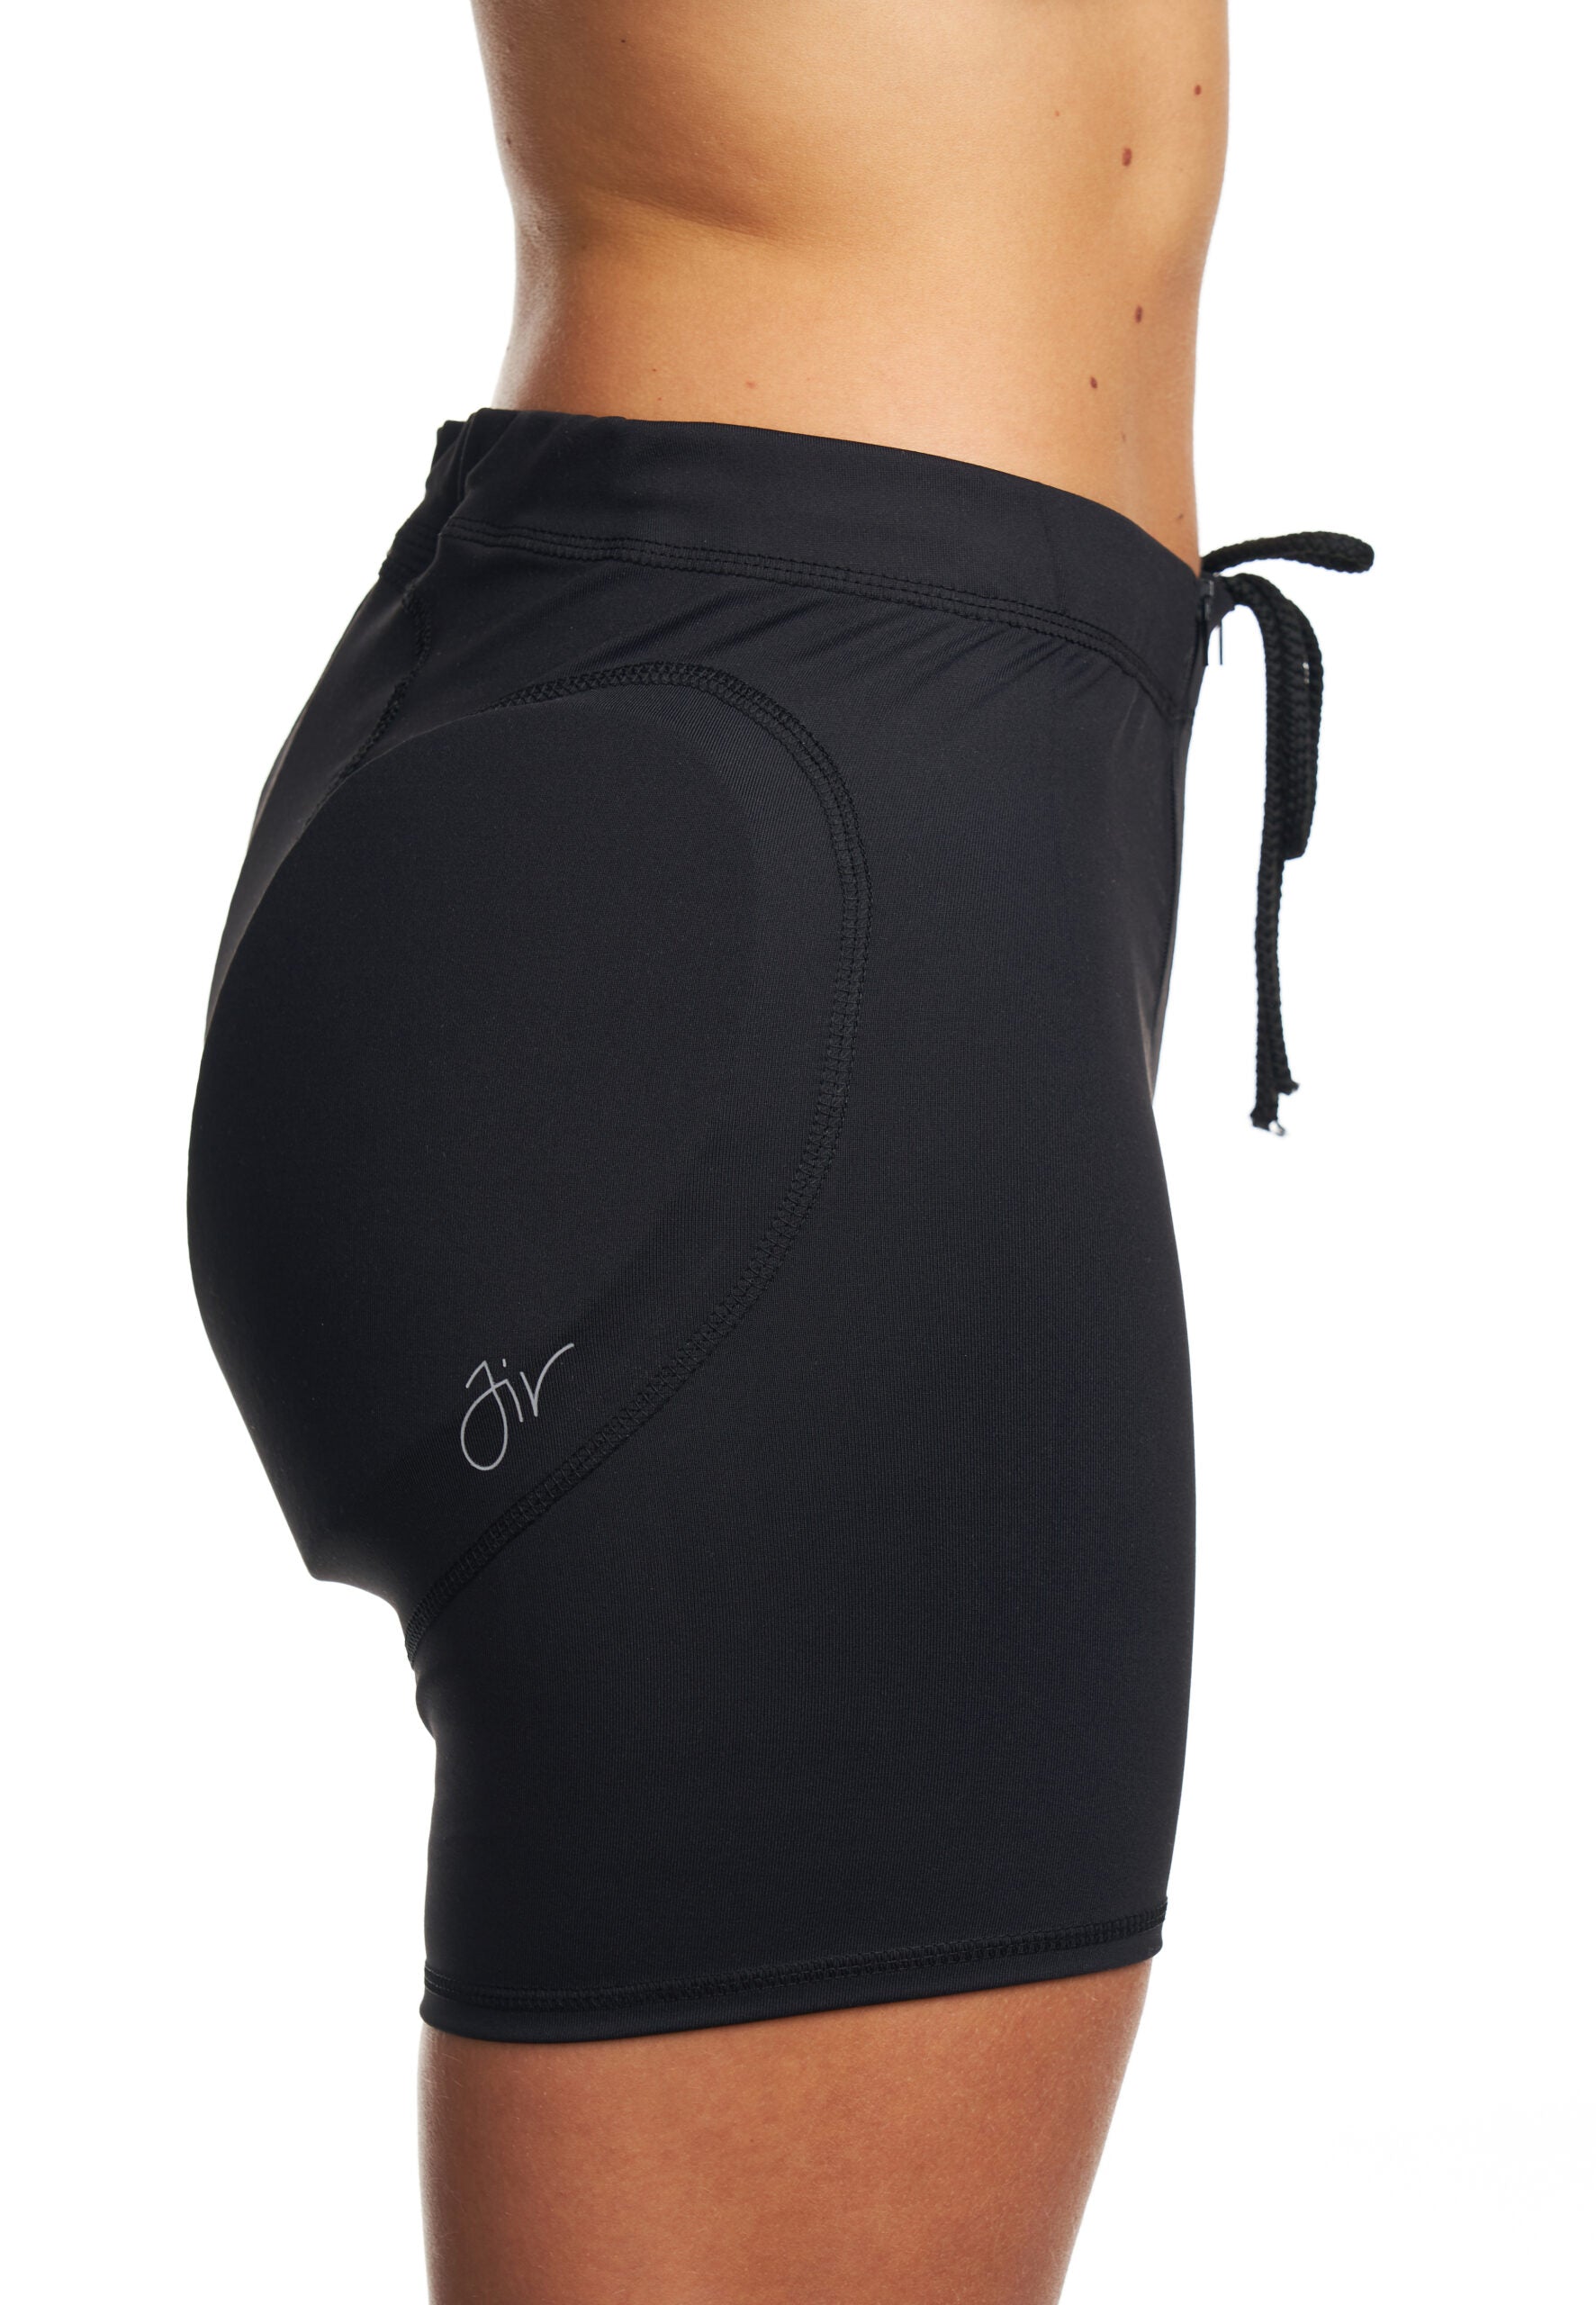 Jiv Sport Paddy'z Protective Padded Shorts in Black